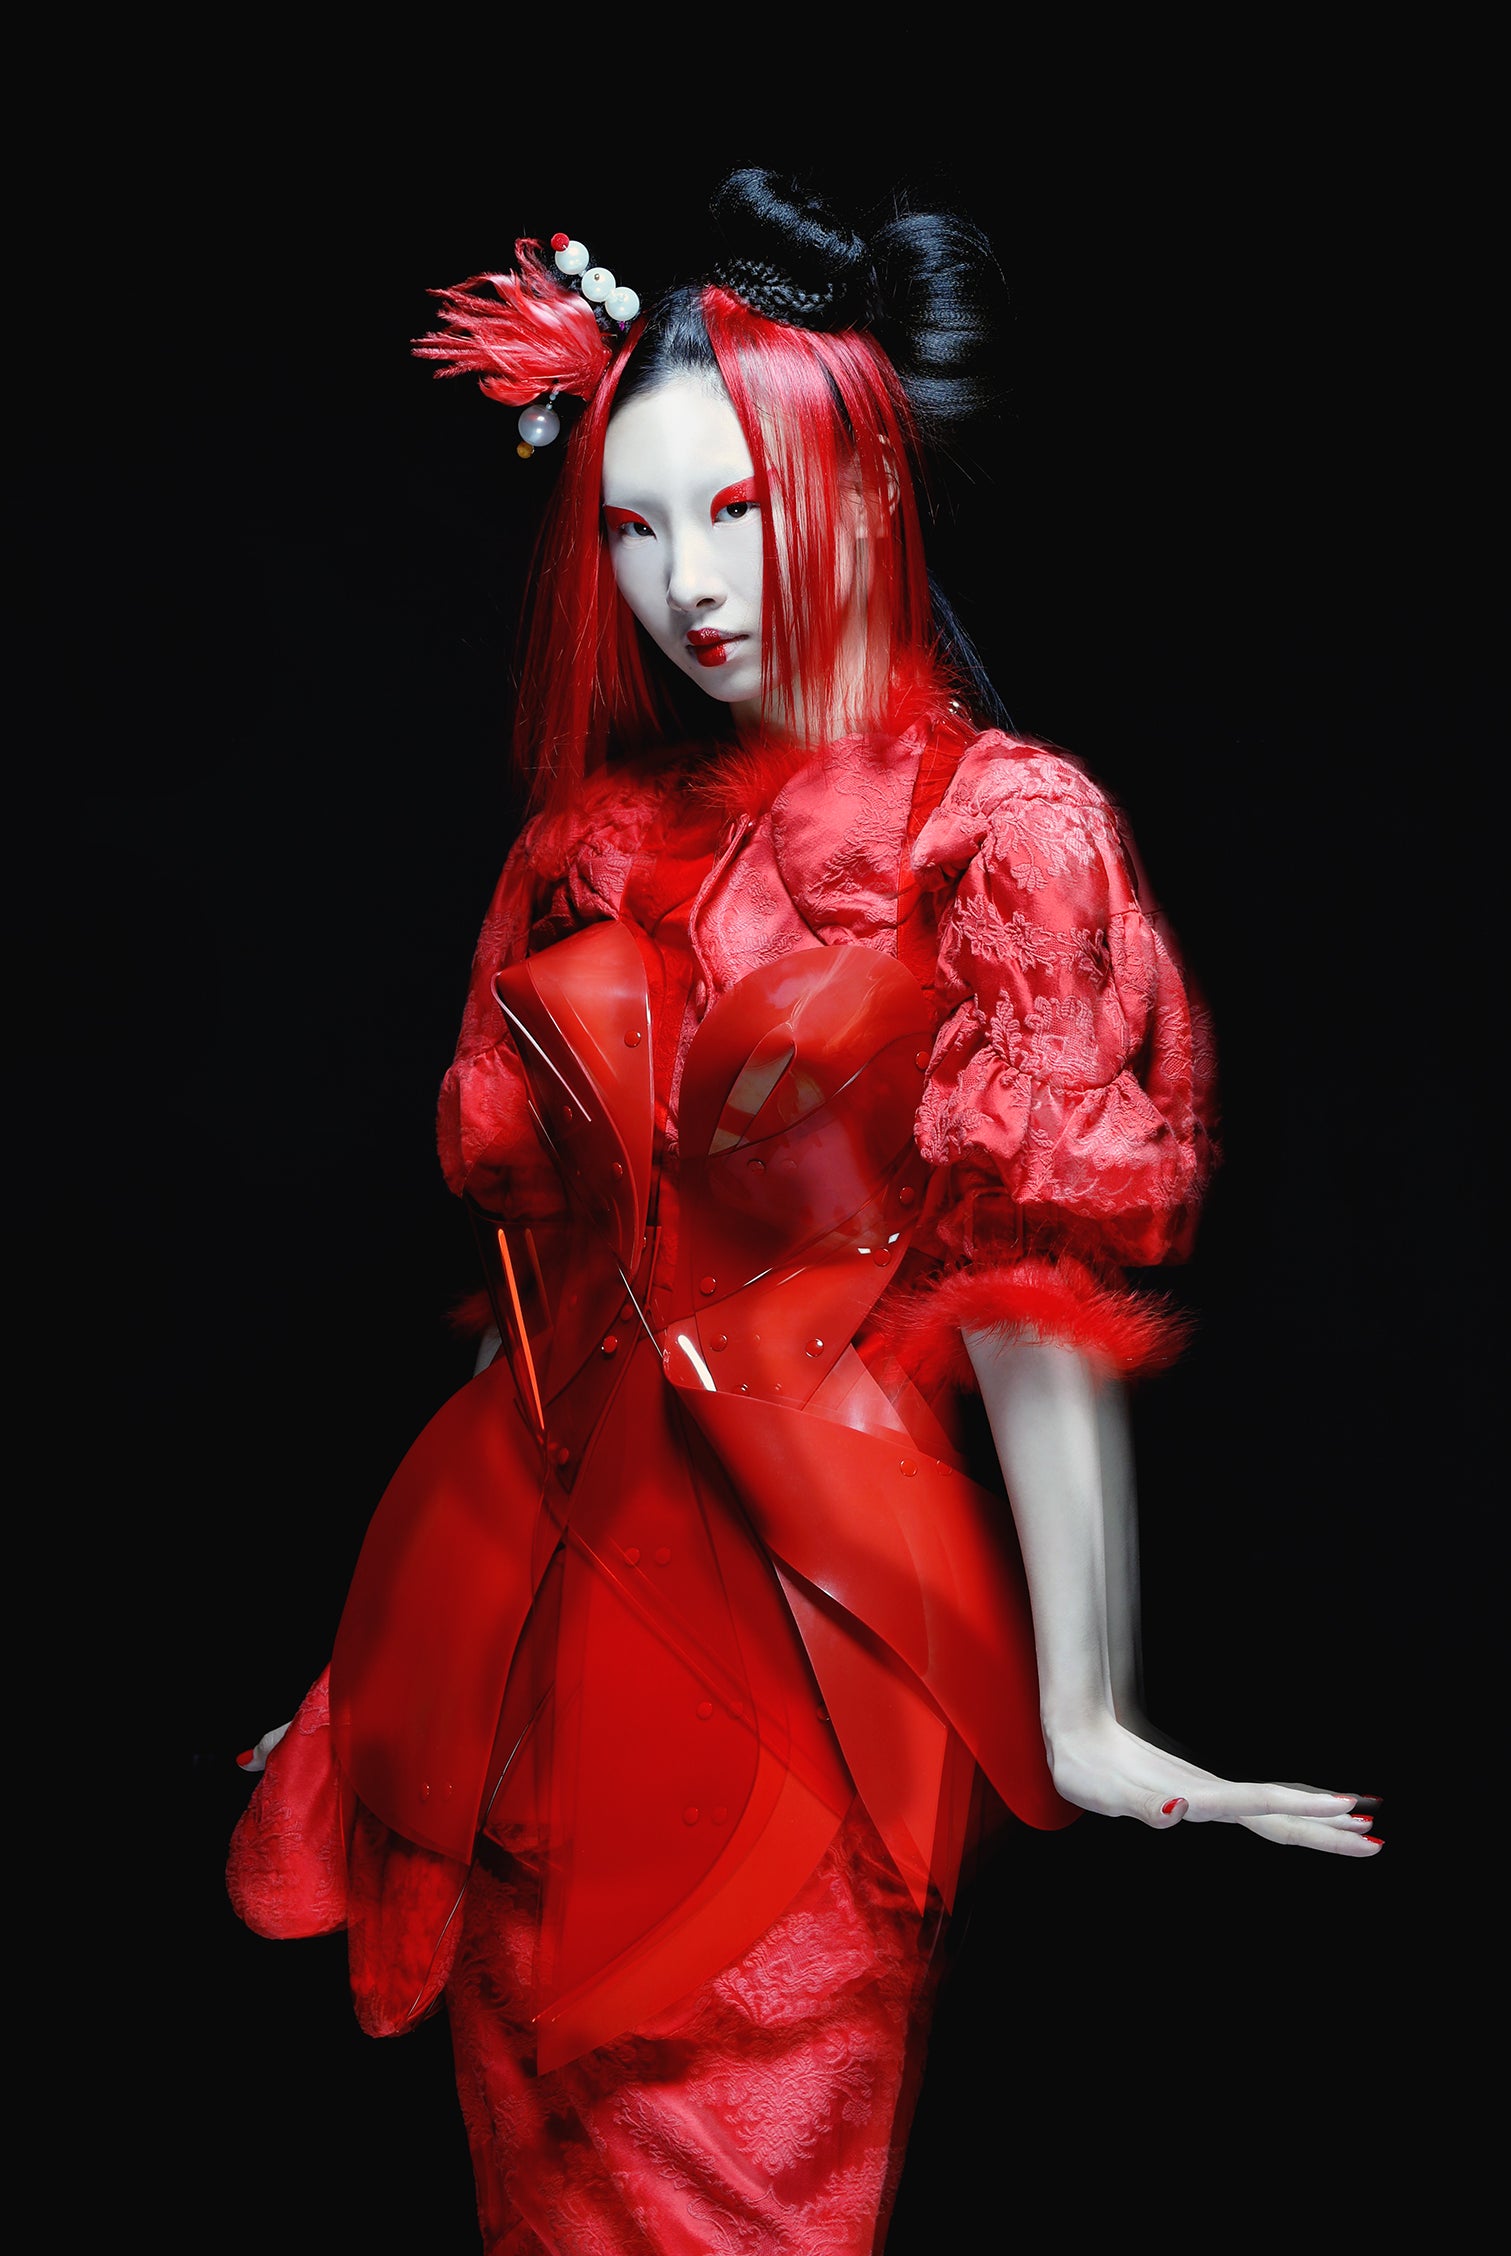 SCMP Style Magazine China x Jivomir Domoustchiev red vegan vinyl sculpture dress